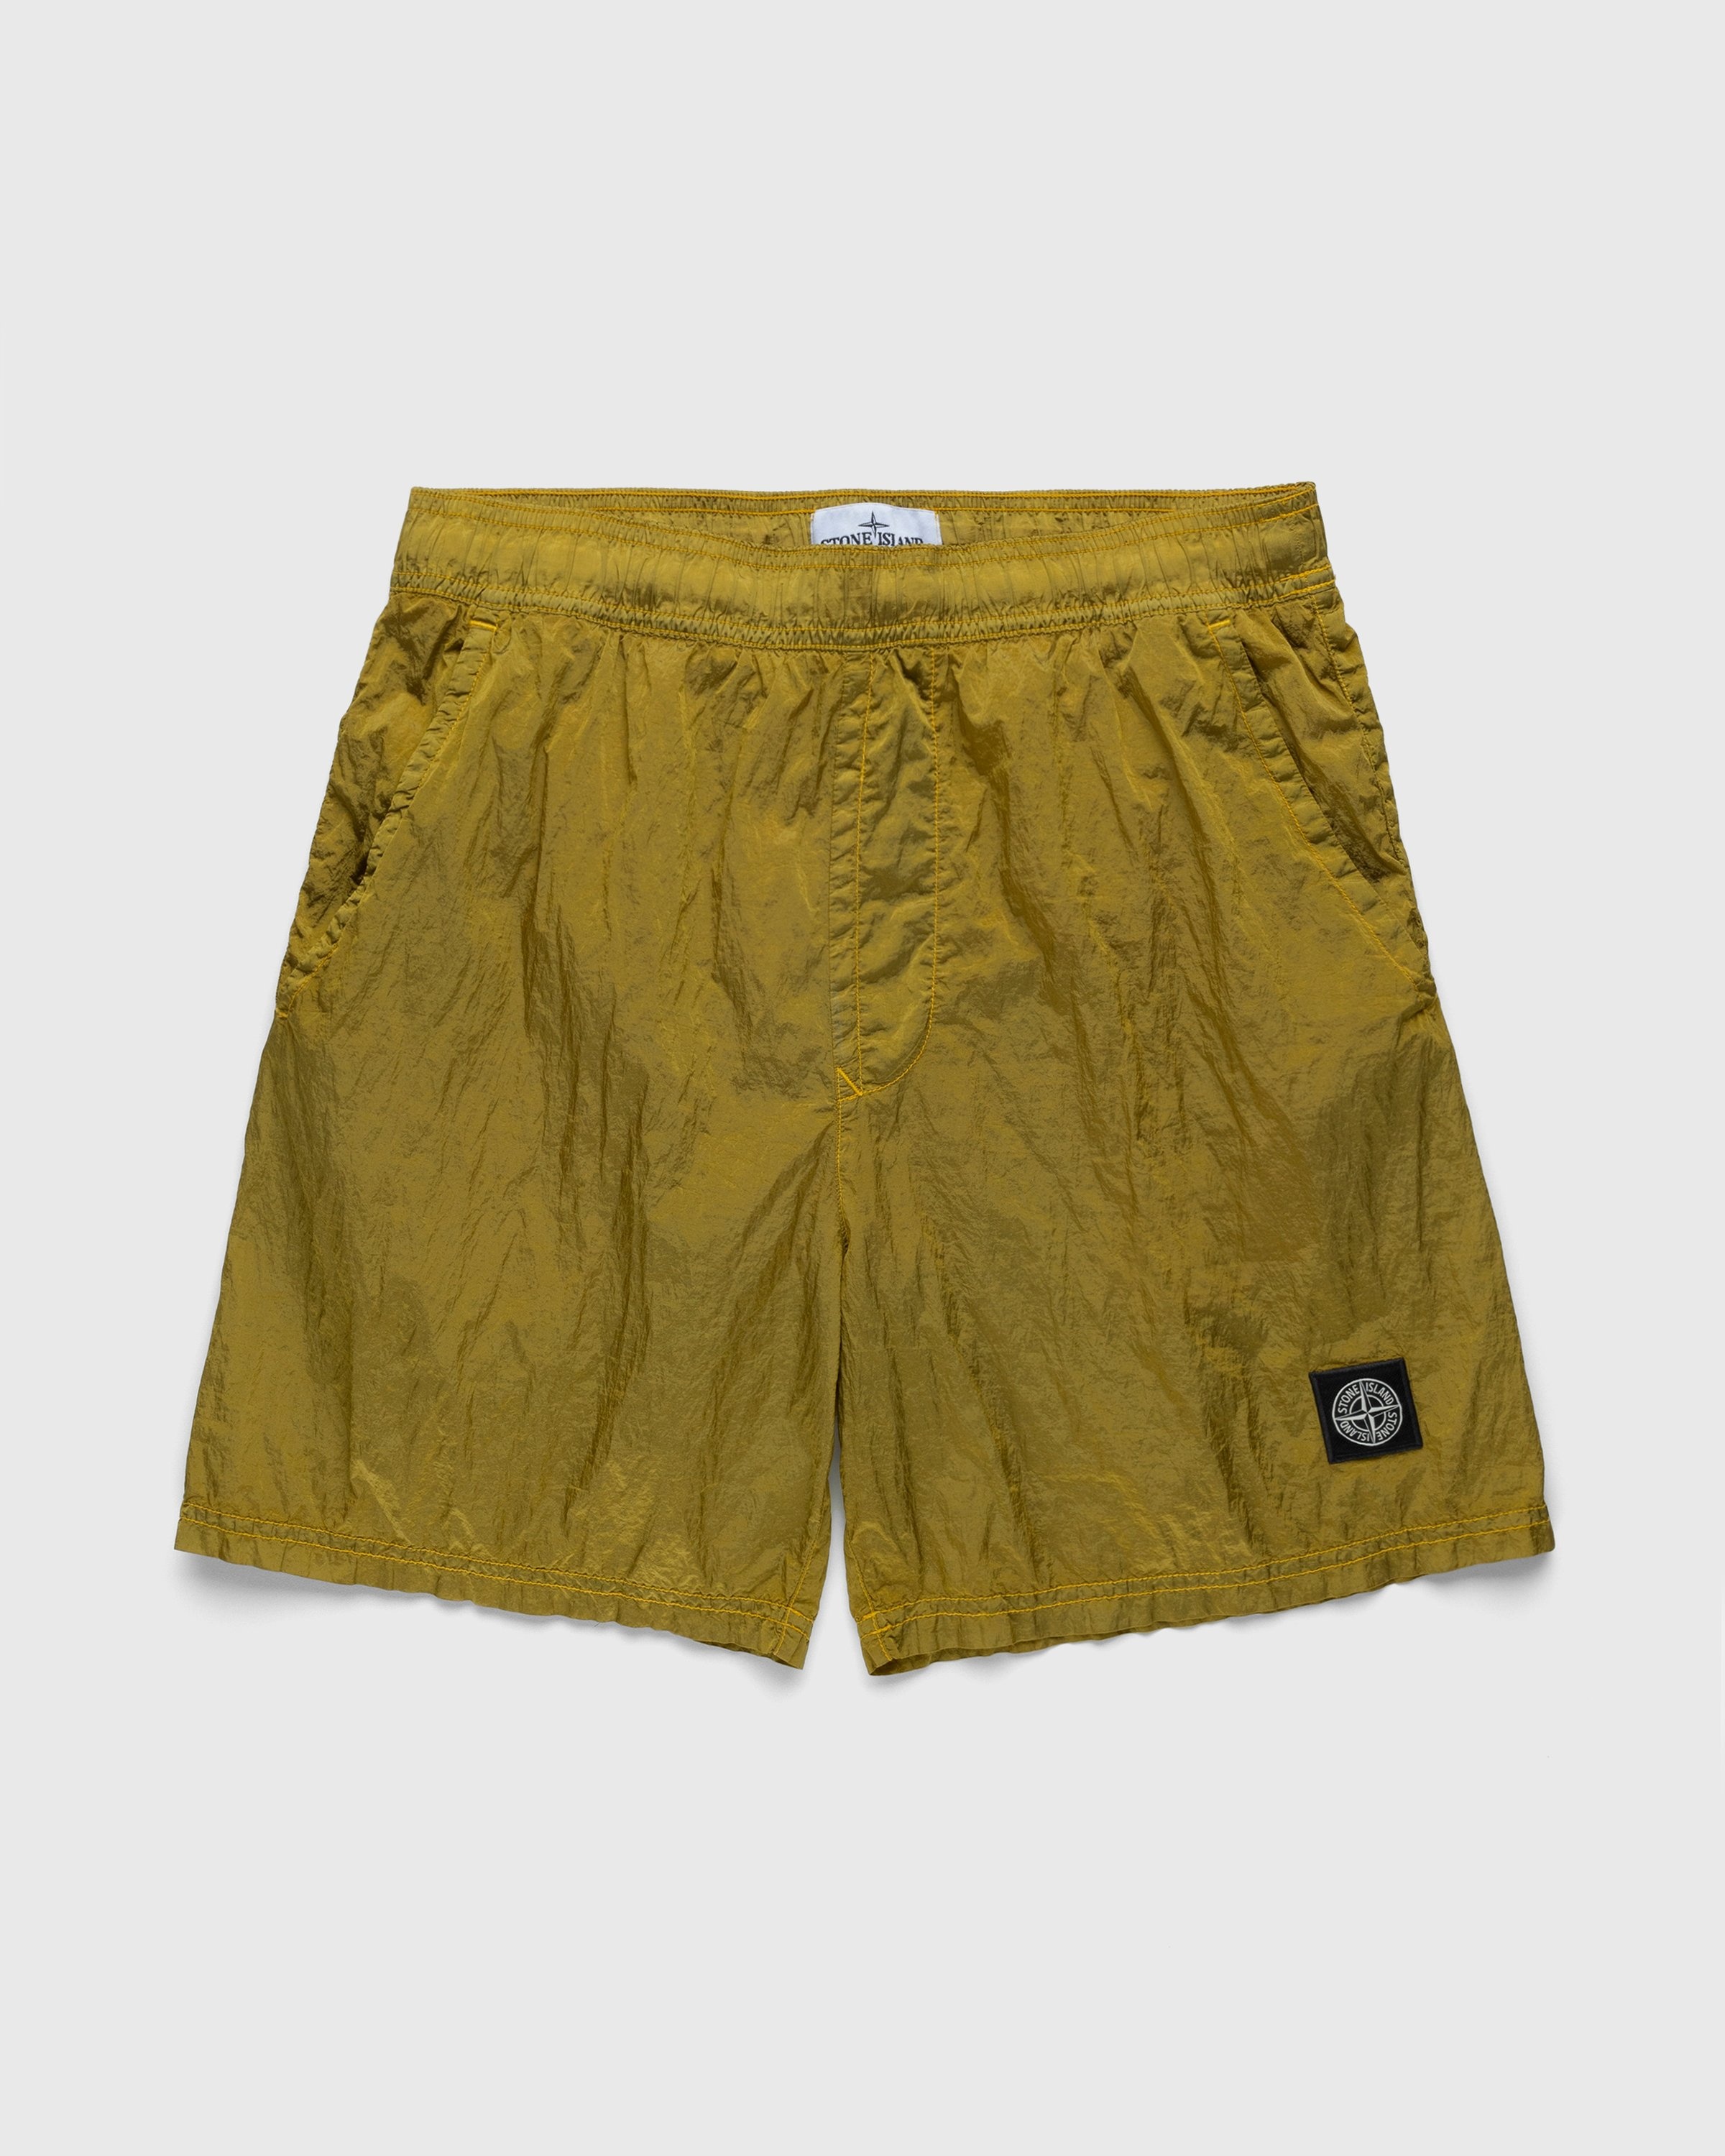 Stone Island – Nylon Metal Swim Shorts Yellow - Swim Shorts - Yellow - Image 1